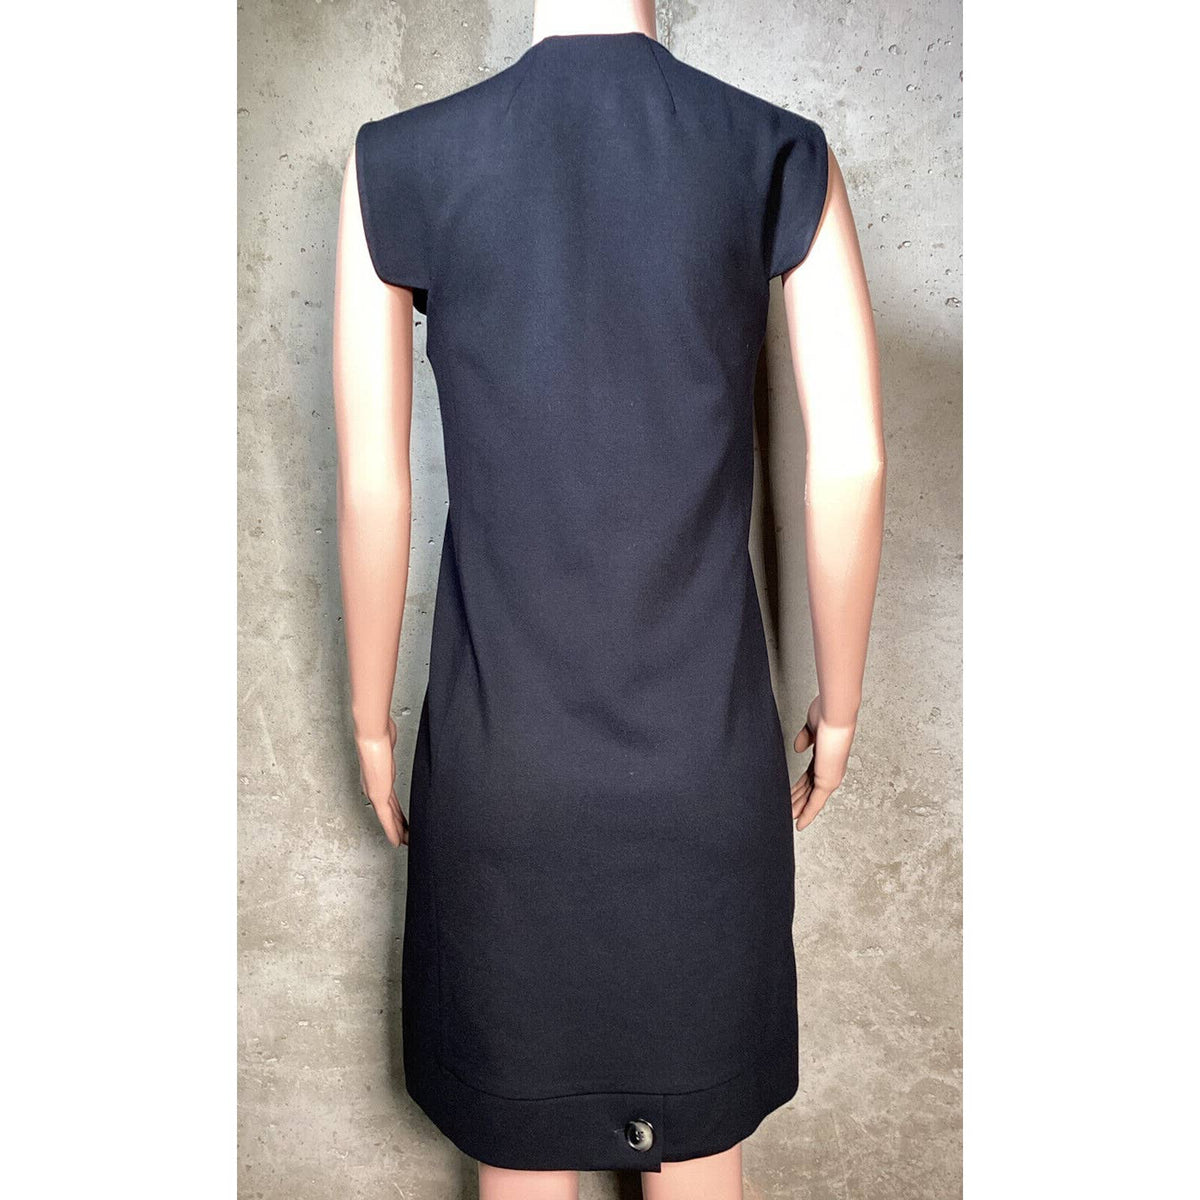 Pearl by Lela Rose Black Button-Up Dress Sz. Medium